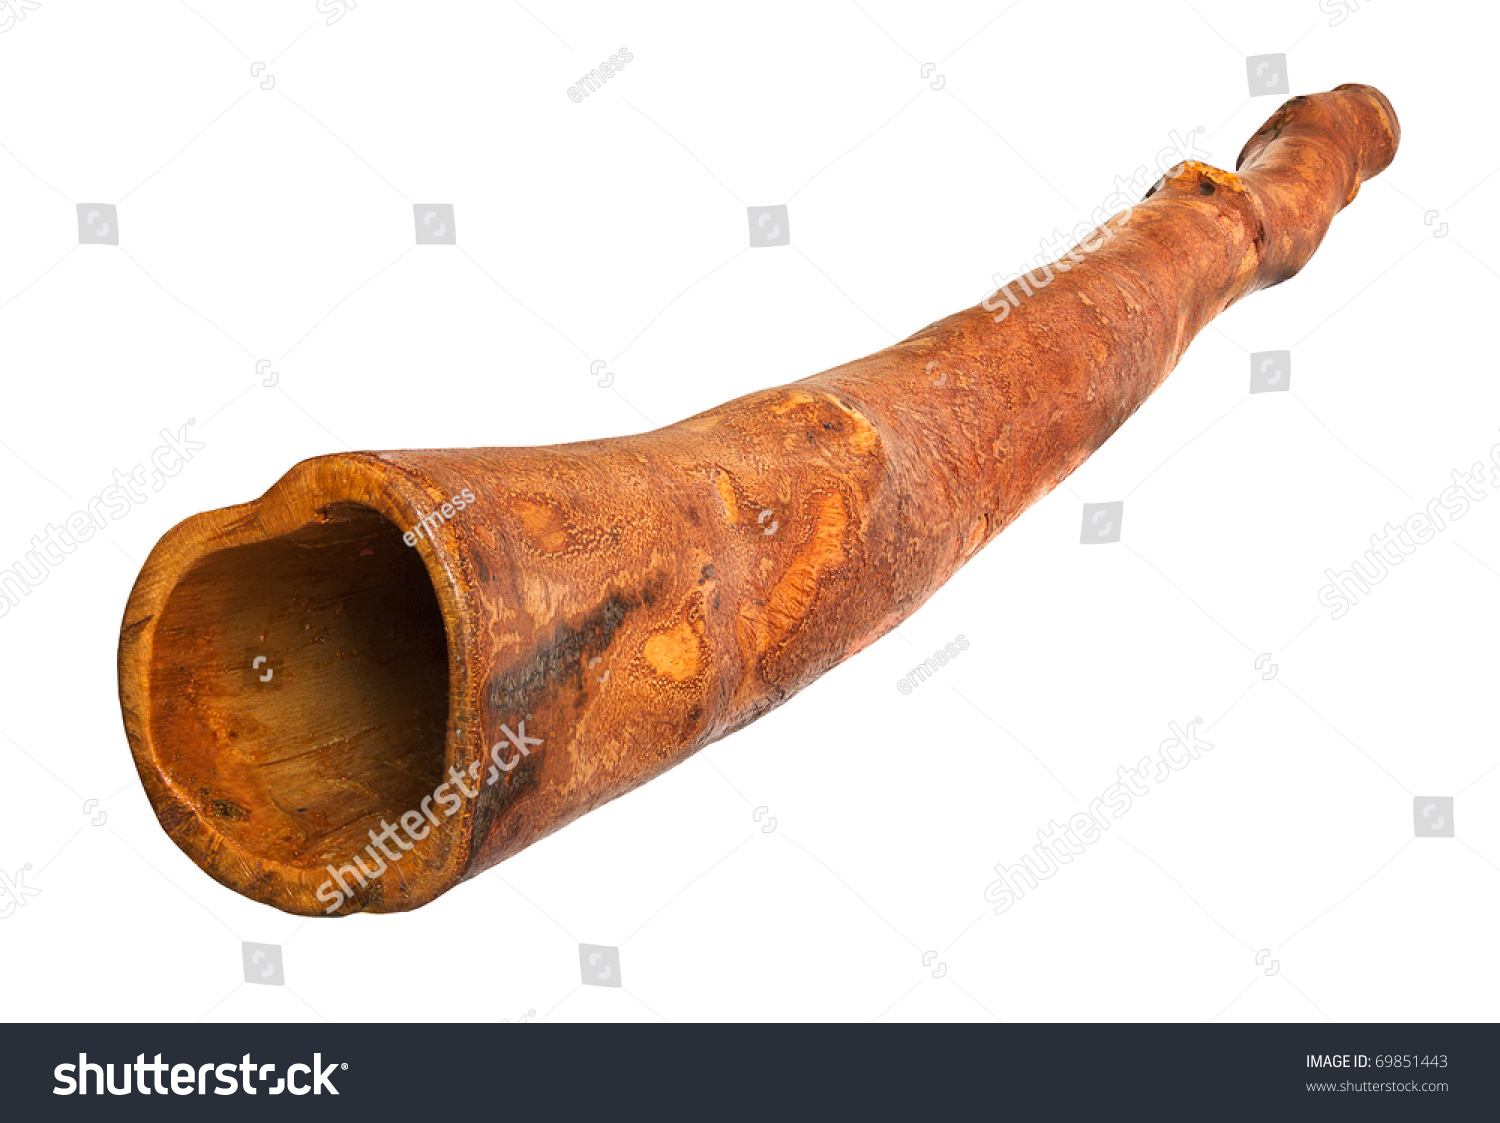 Goneryl indkomst sigte Didgeridoo Traditional Aboriginal Australian Musical Instrument Stock-foto  (rediger nu) 69851443